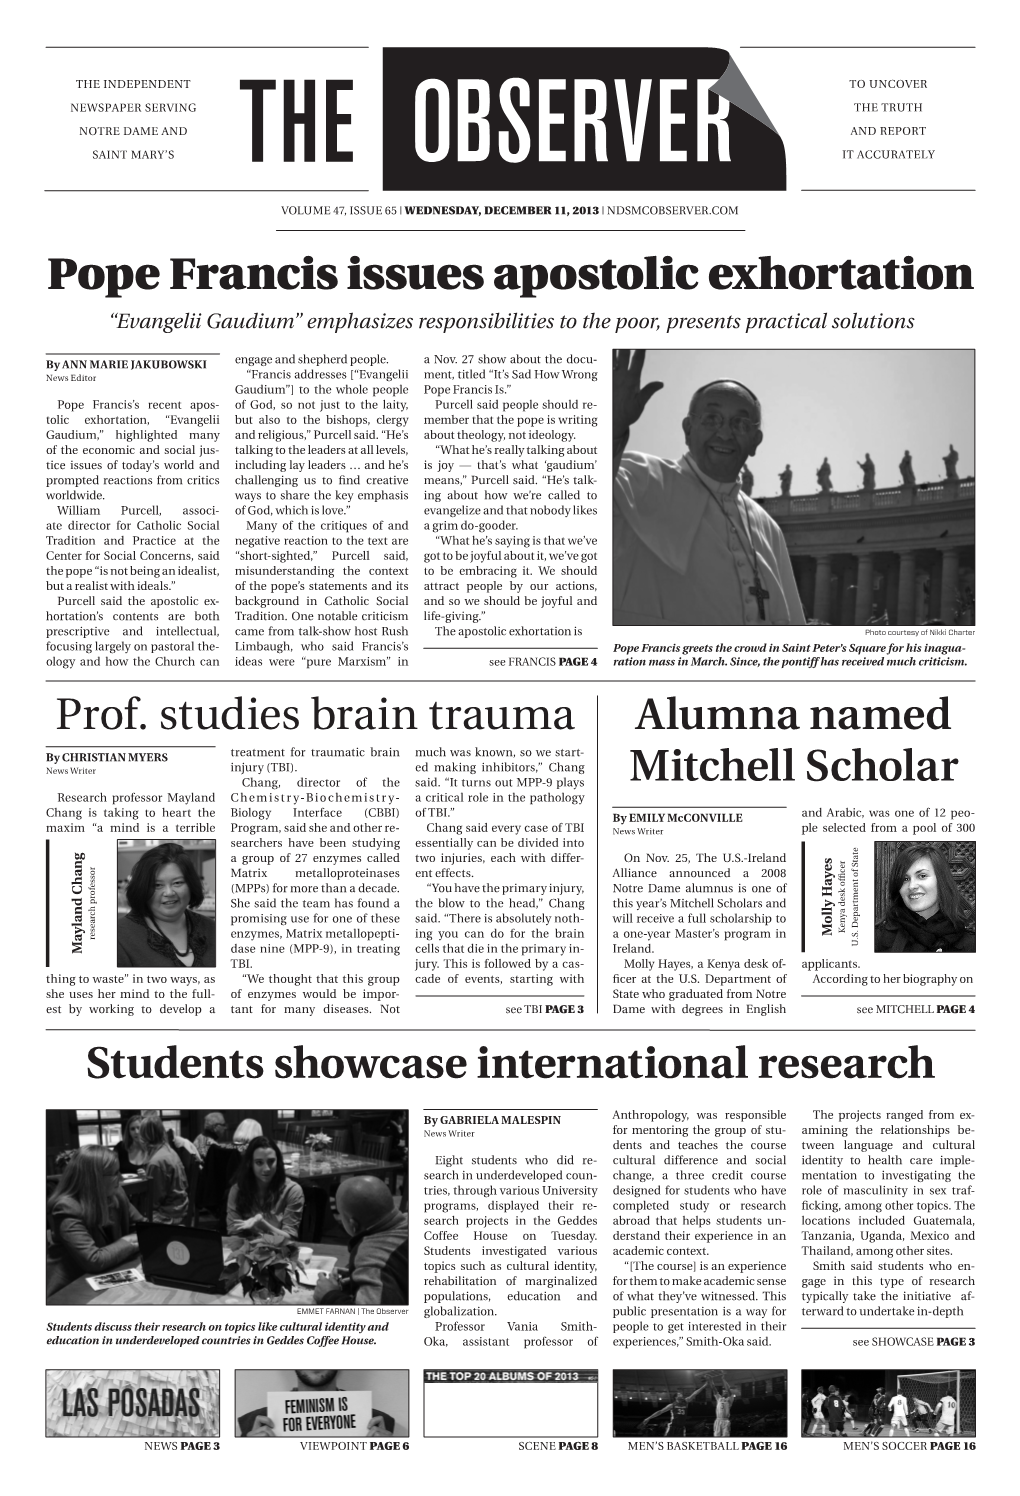 Pope Francis Issues Apostolic Exhortation Prof. Studies Brain